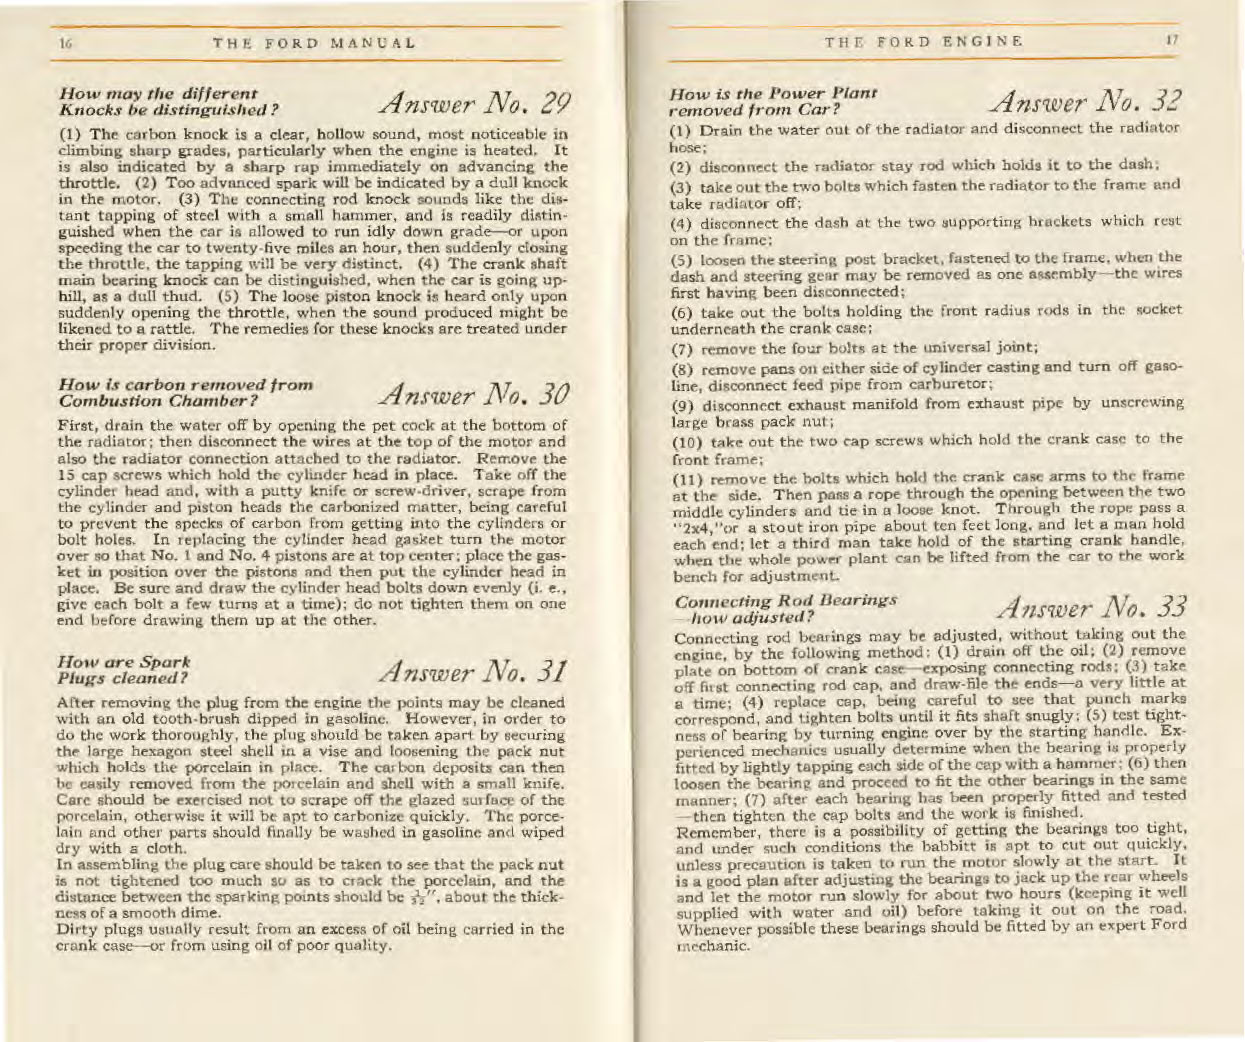 n_1919 Ford Manual-16-17.jpg